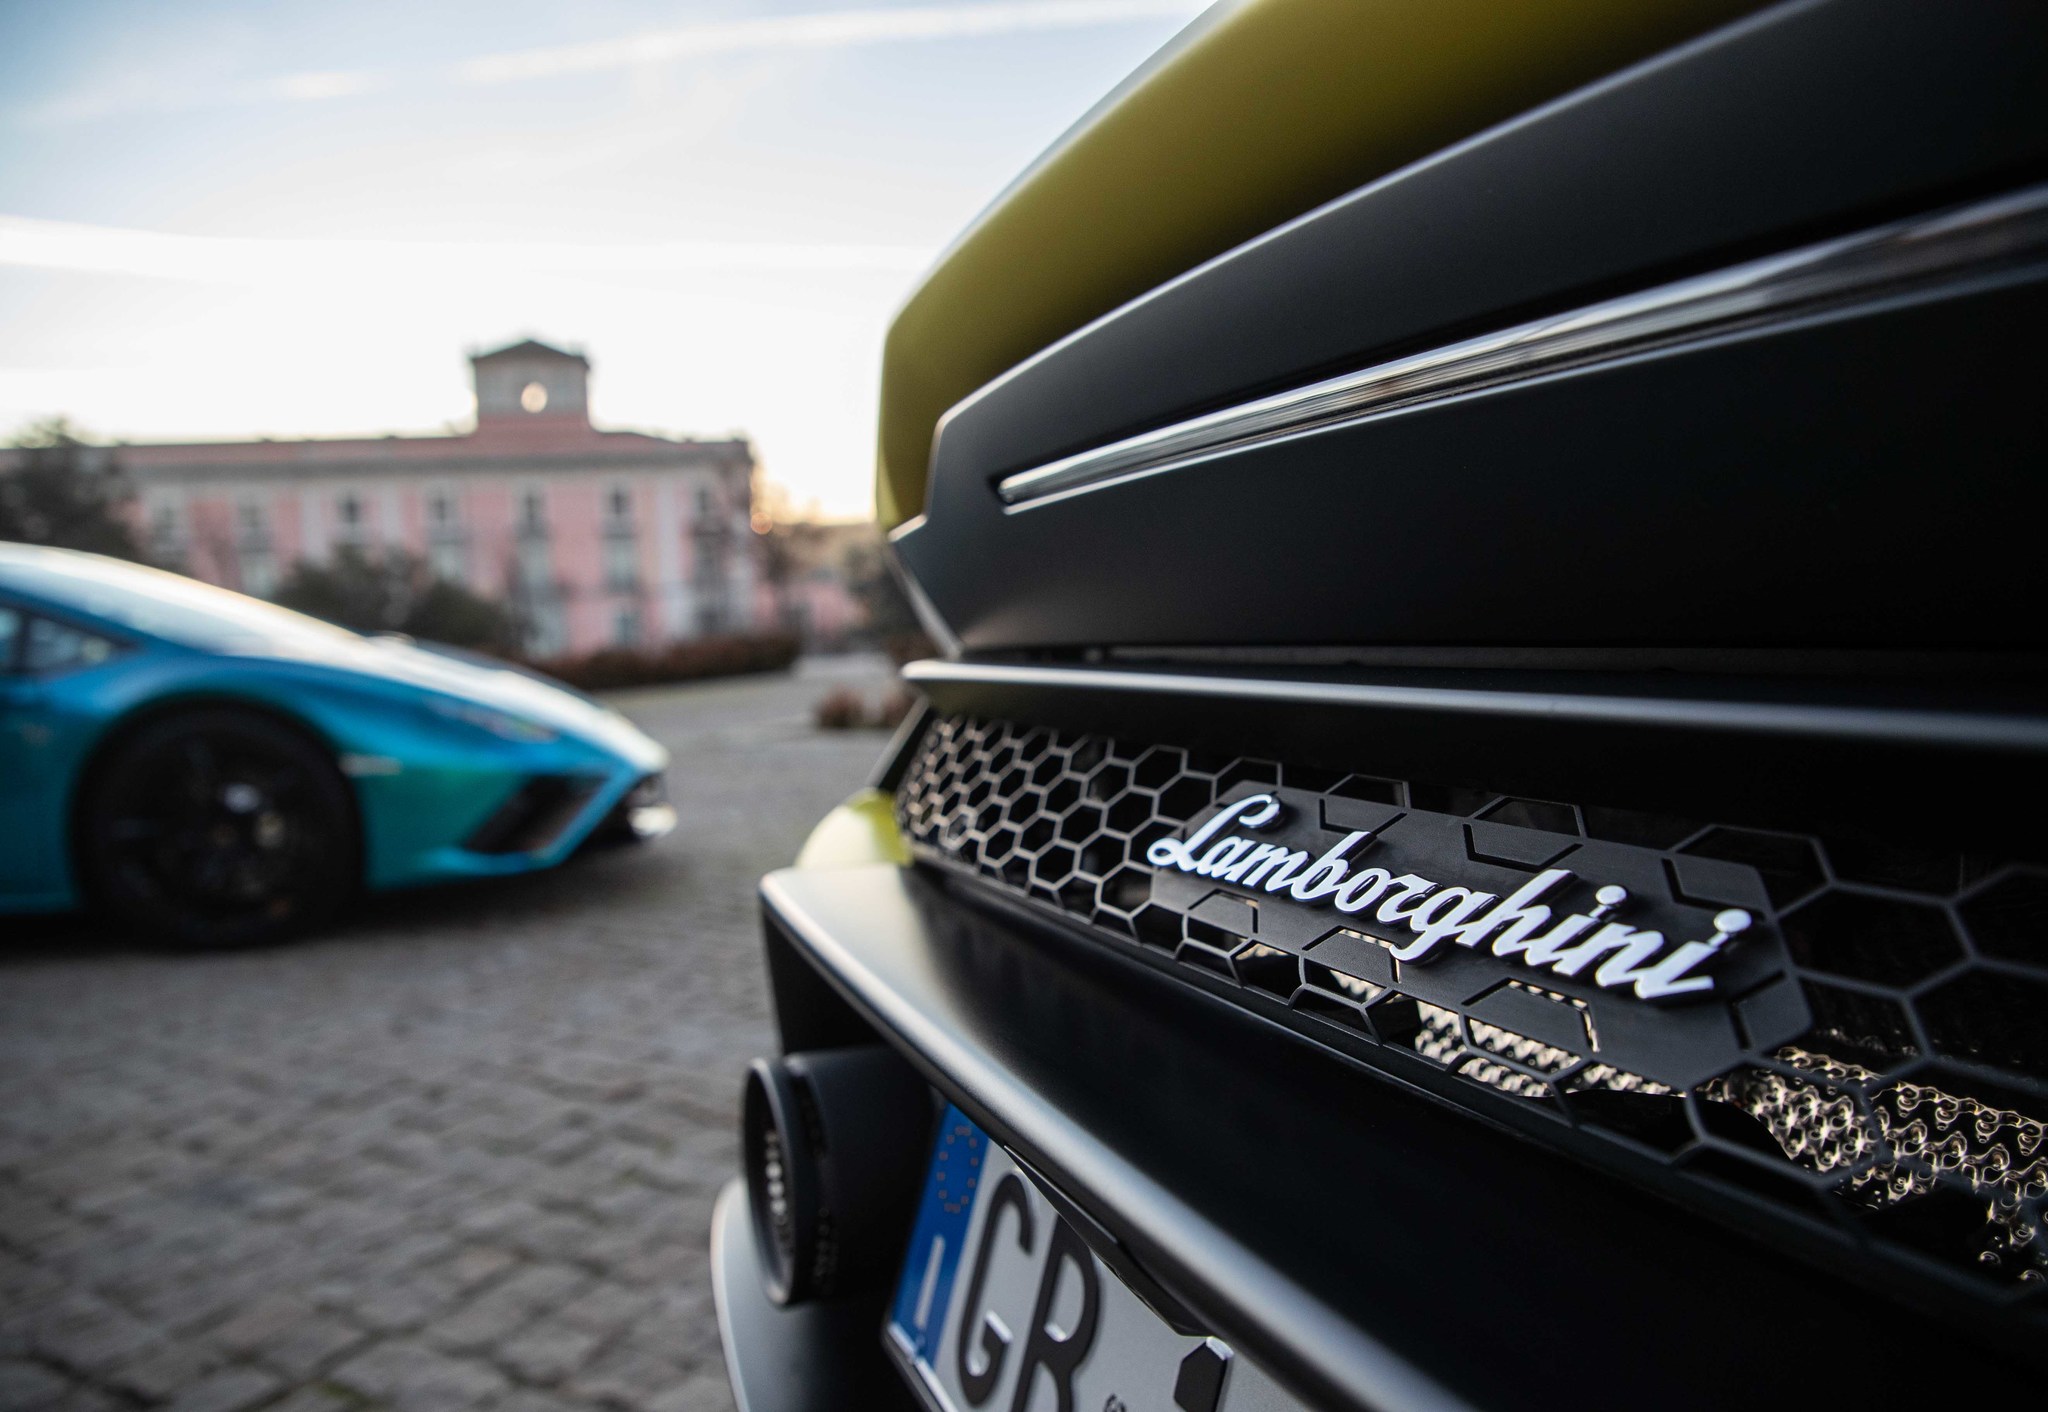 Lamborghini record de ventas 2021 - Urus - Huracan - 8.200 unidades - David Martin